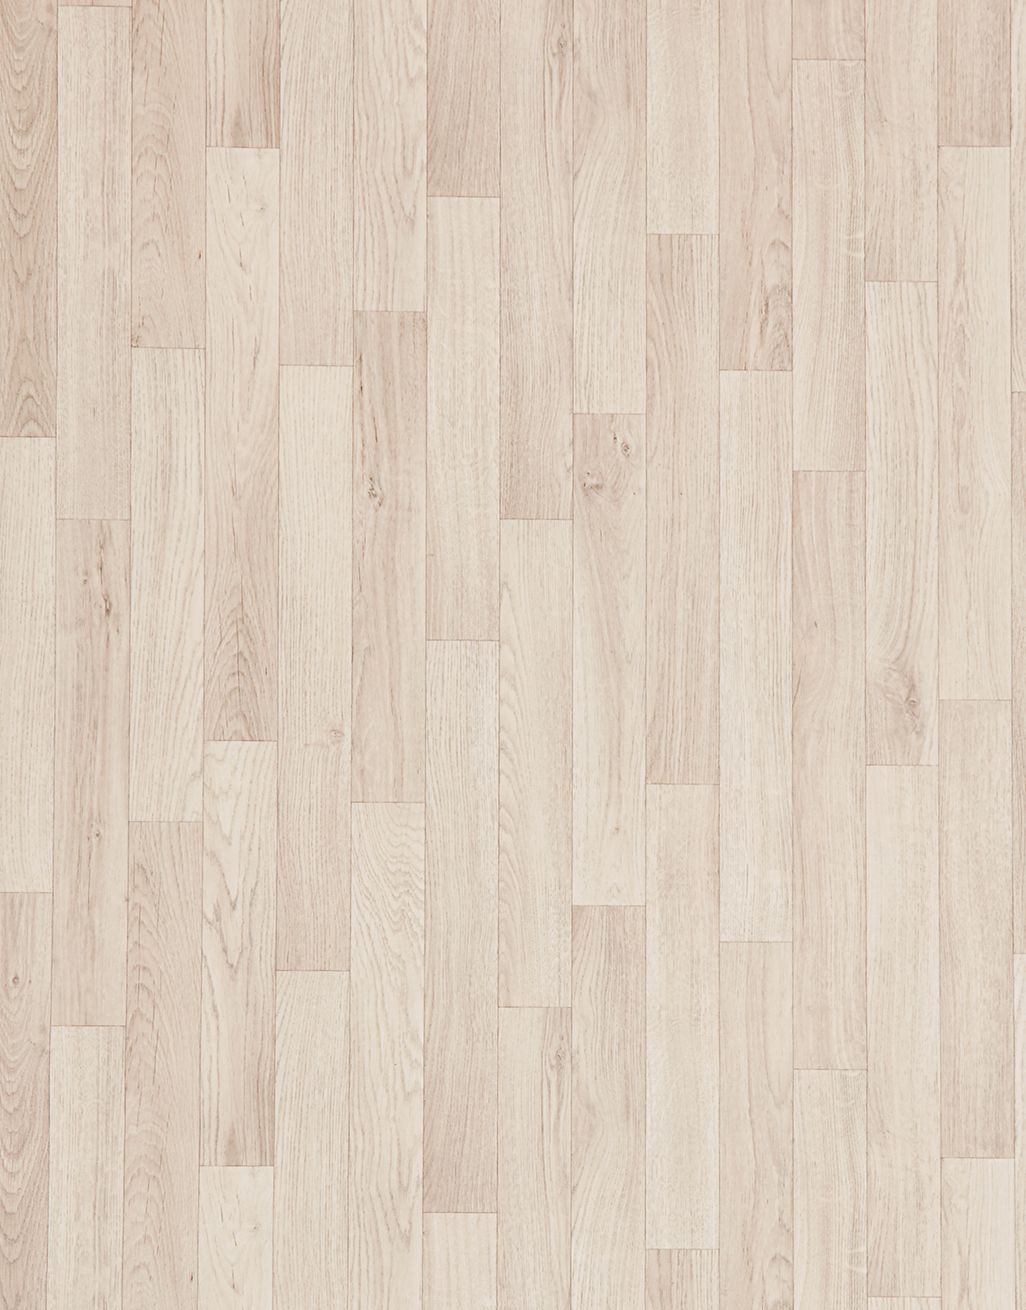 Colorado Columbia Oak Flooring, Columbia Engineered Hardwood Flooring